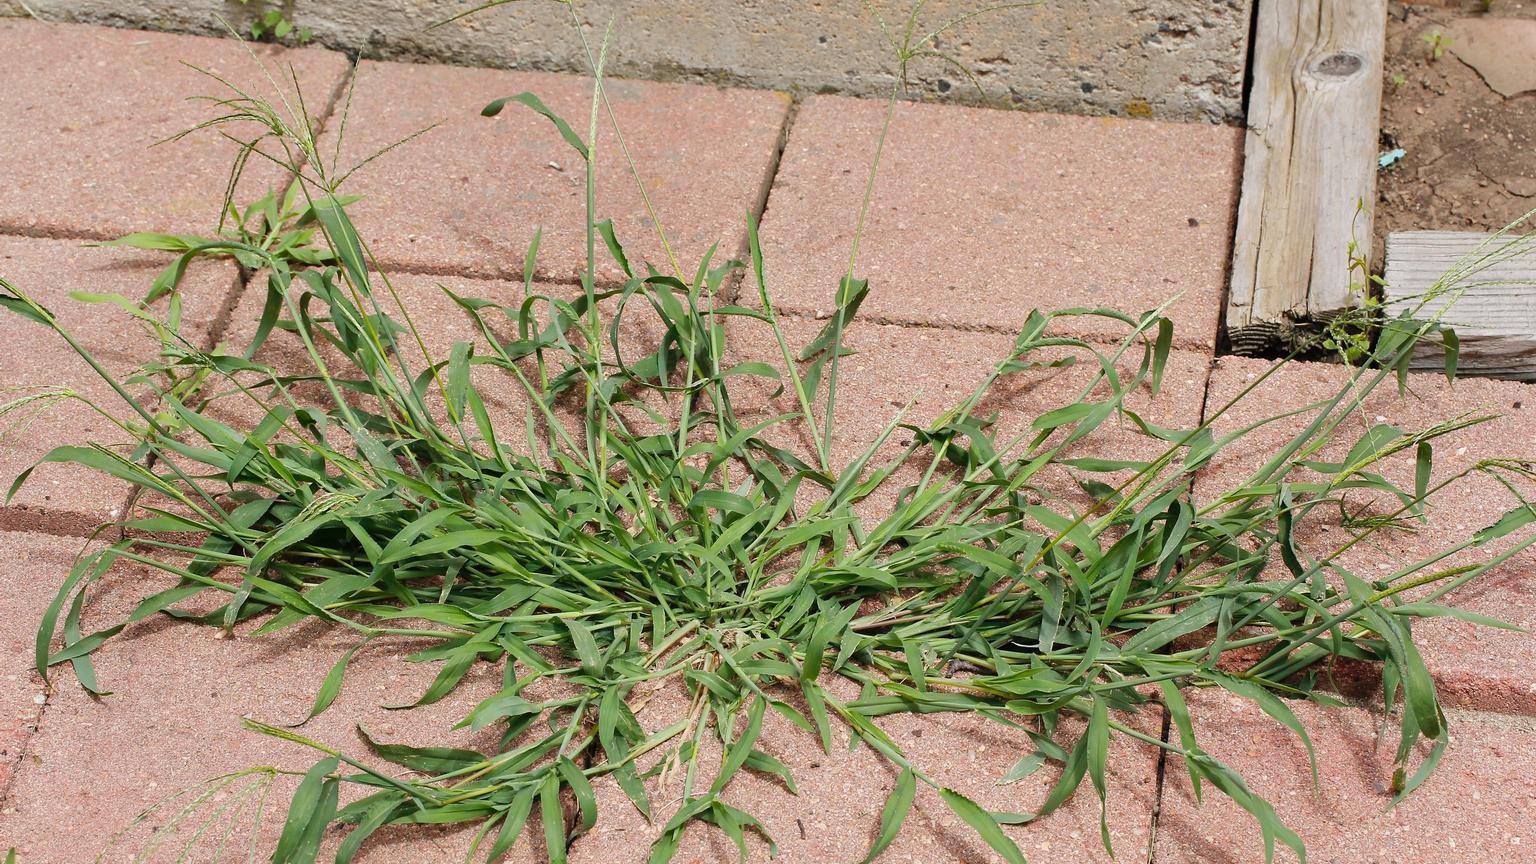 crabgrass in a sidewalk